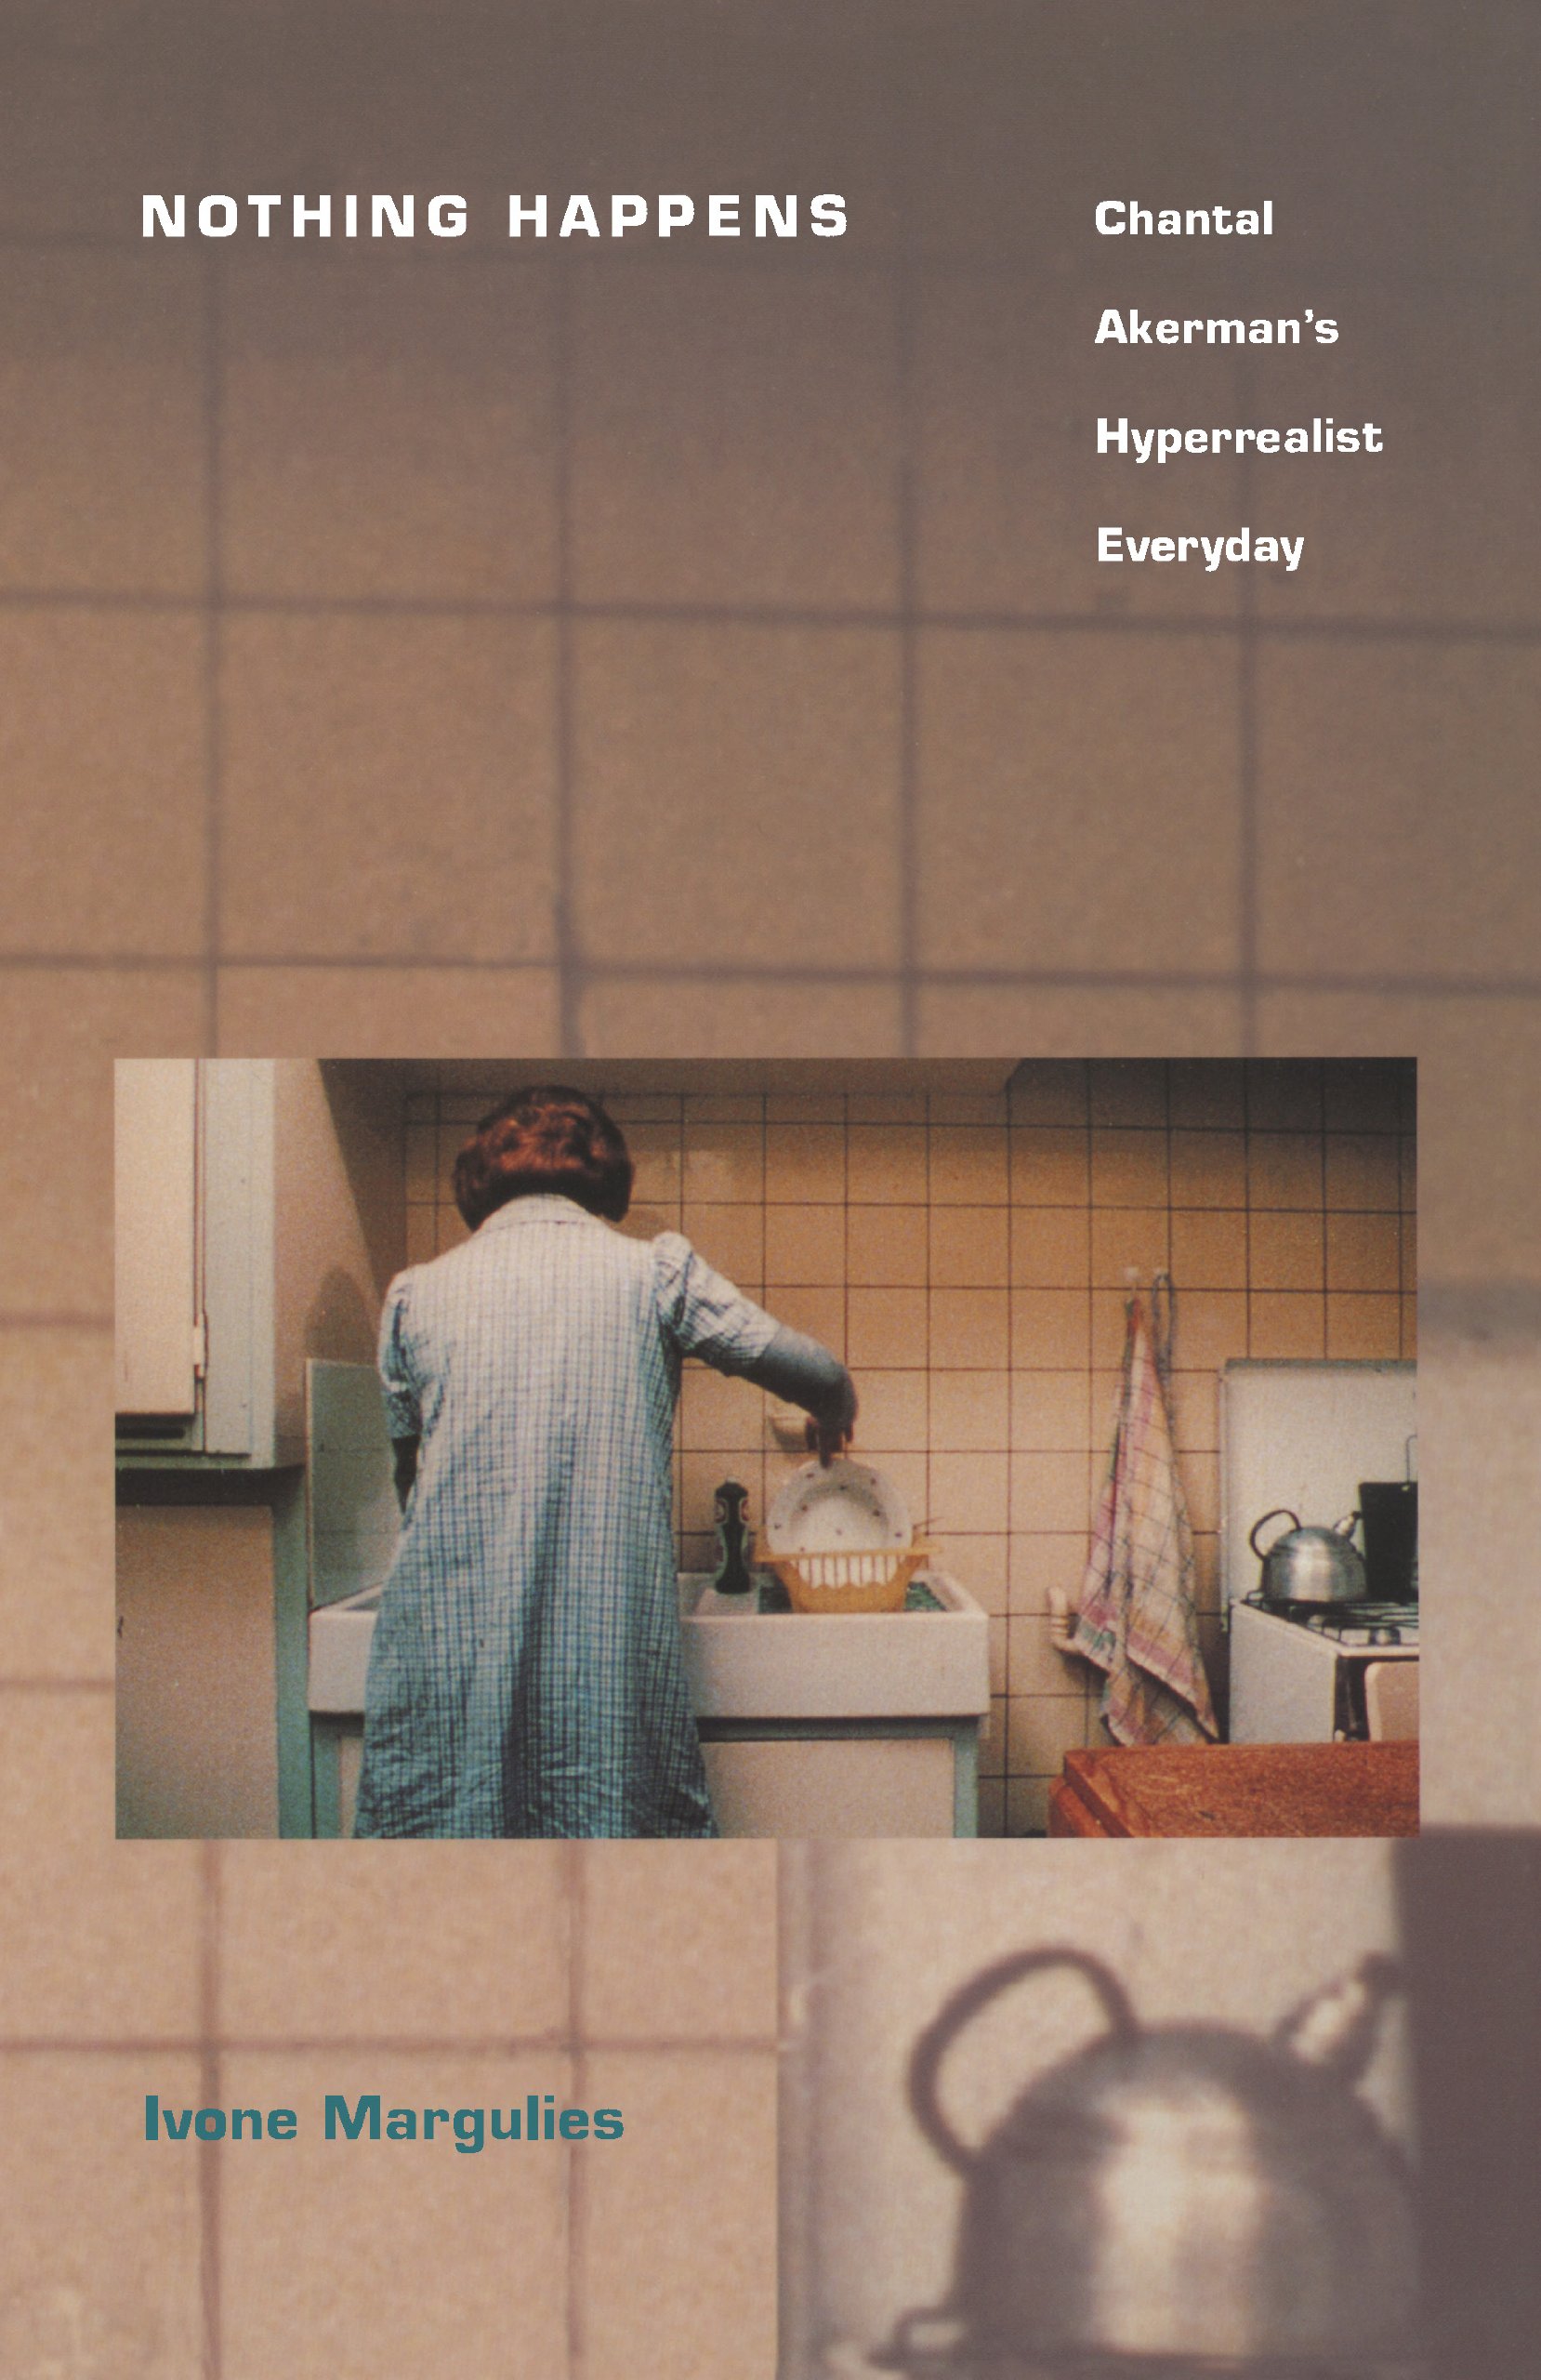 Nothing Happens: Chantal Akerman's Hyperrealist Everyday by Ivone Margulies (Duke University Press, 1996).